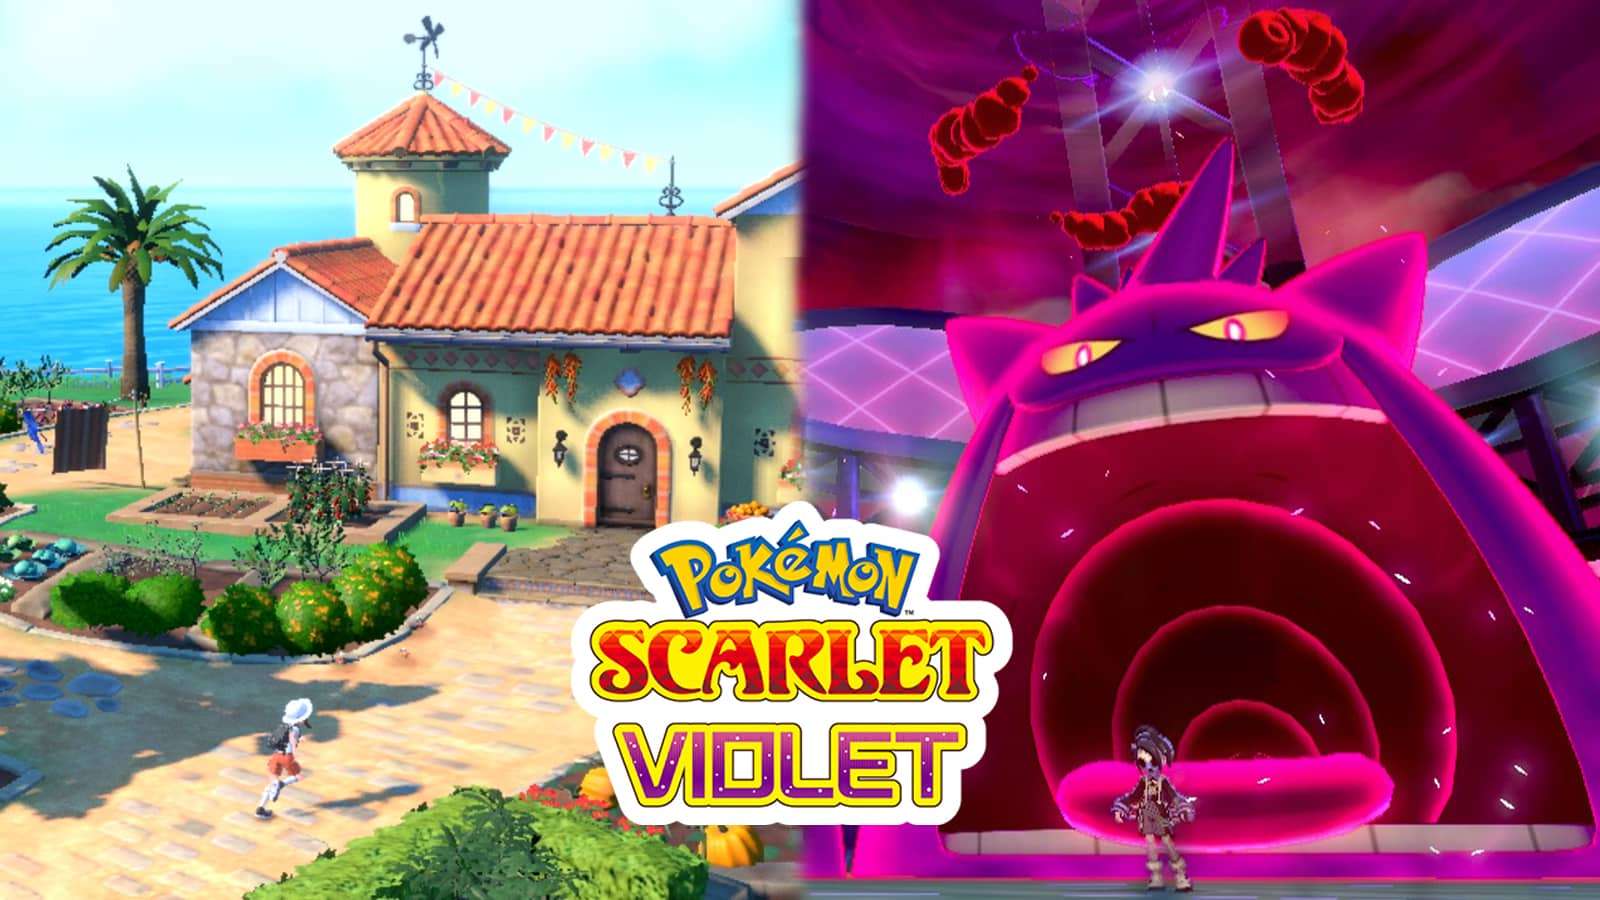 Pokemon Scarlet & Violet protagonist house next to Sword & Shield Dynamax Gengar screenshot.